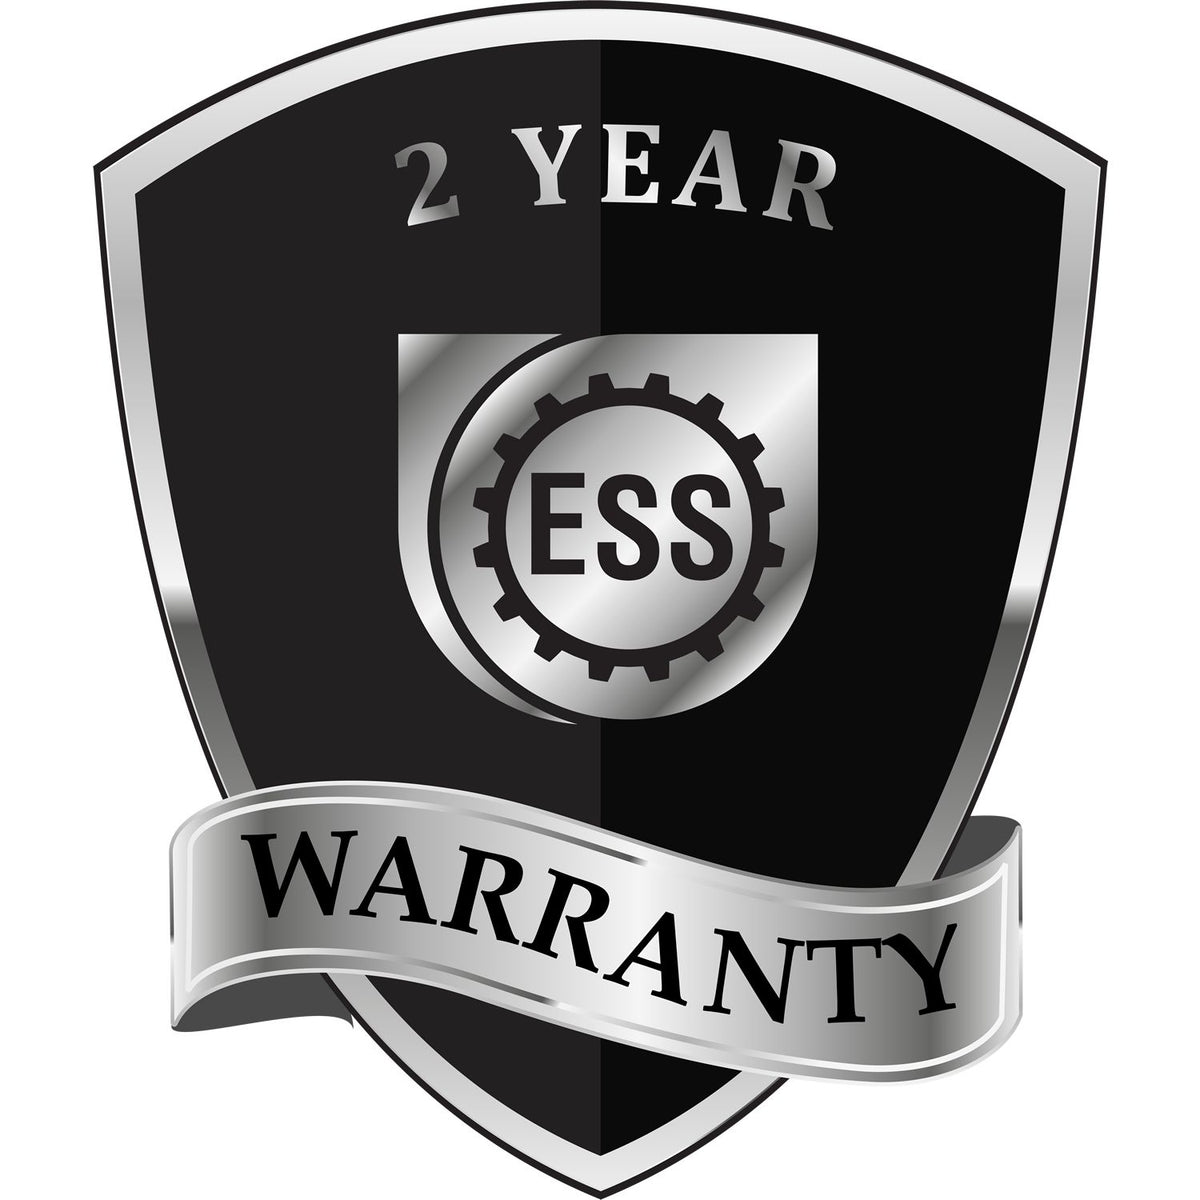 A black and silver badge or emblem showing warranty information for the Hybrid Virginia Land Surveyor Seal